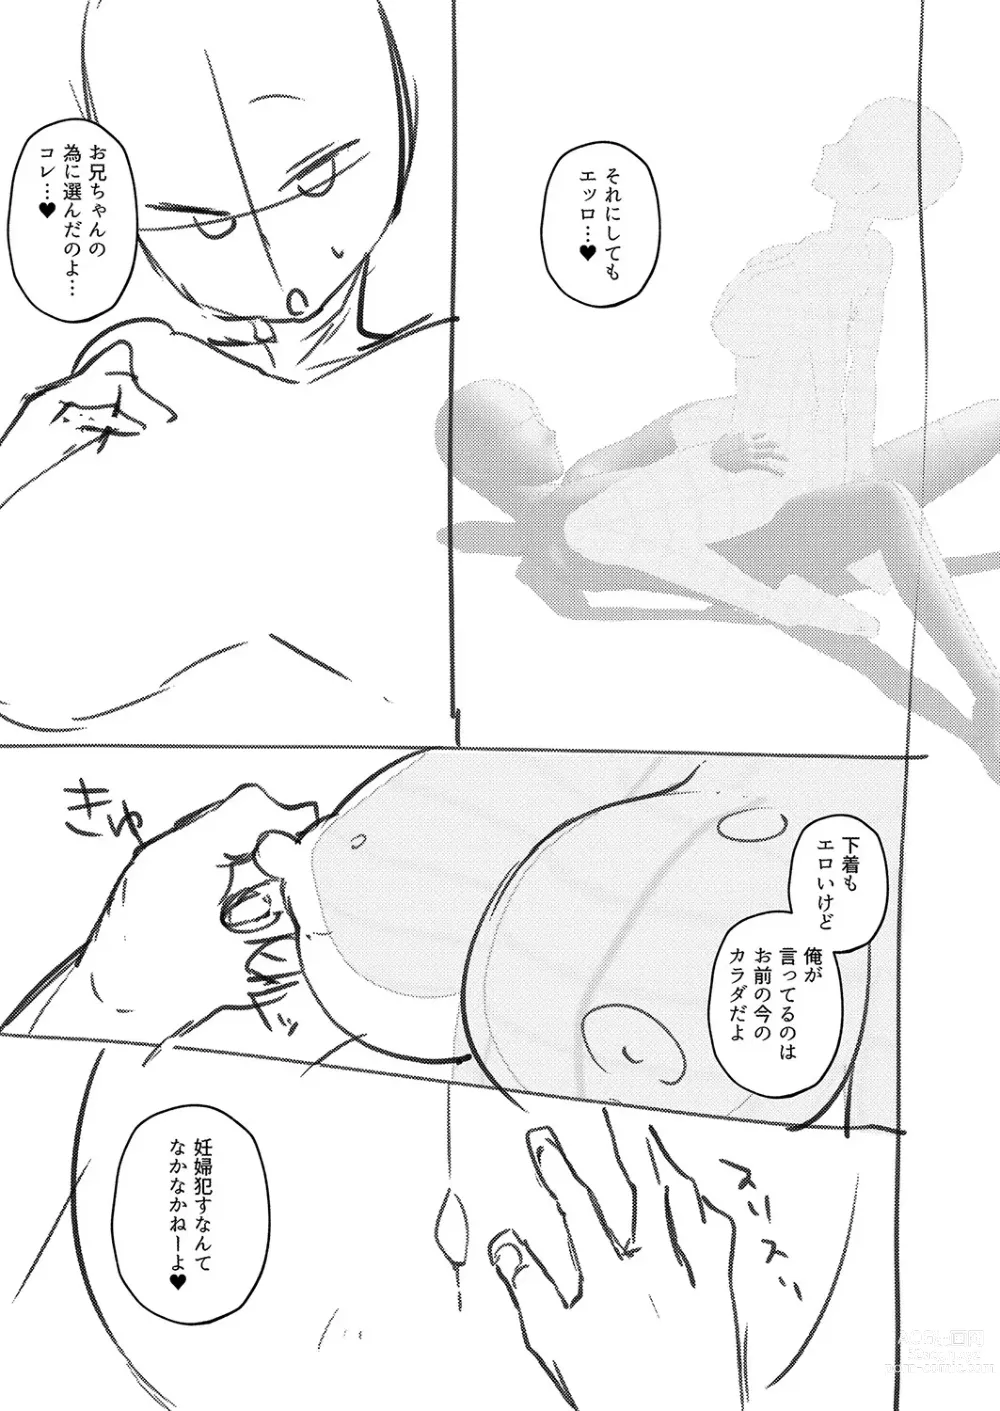 Page 212 of manga Daijoubu. Jitsumai no Kouryakubon da yo. FANZA Tokusouban